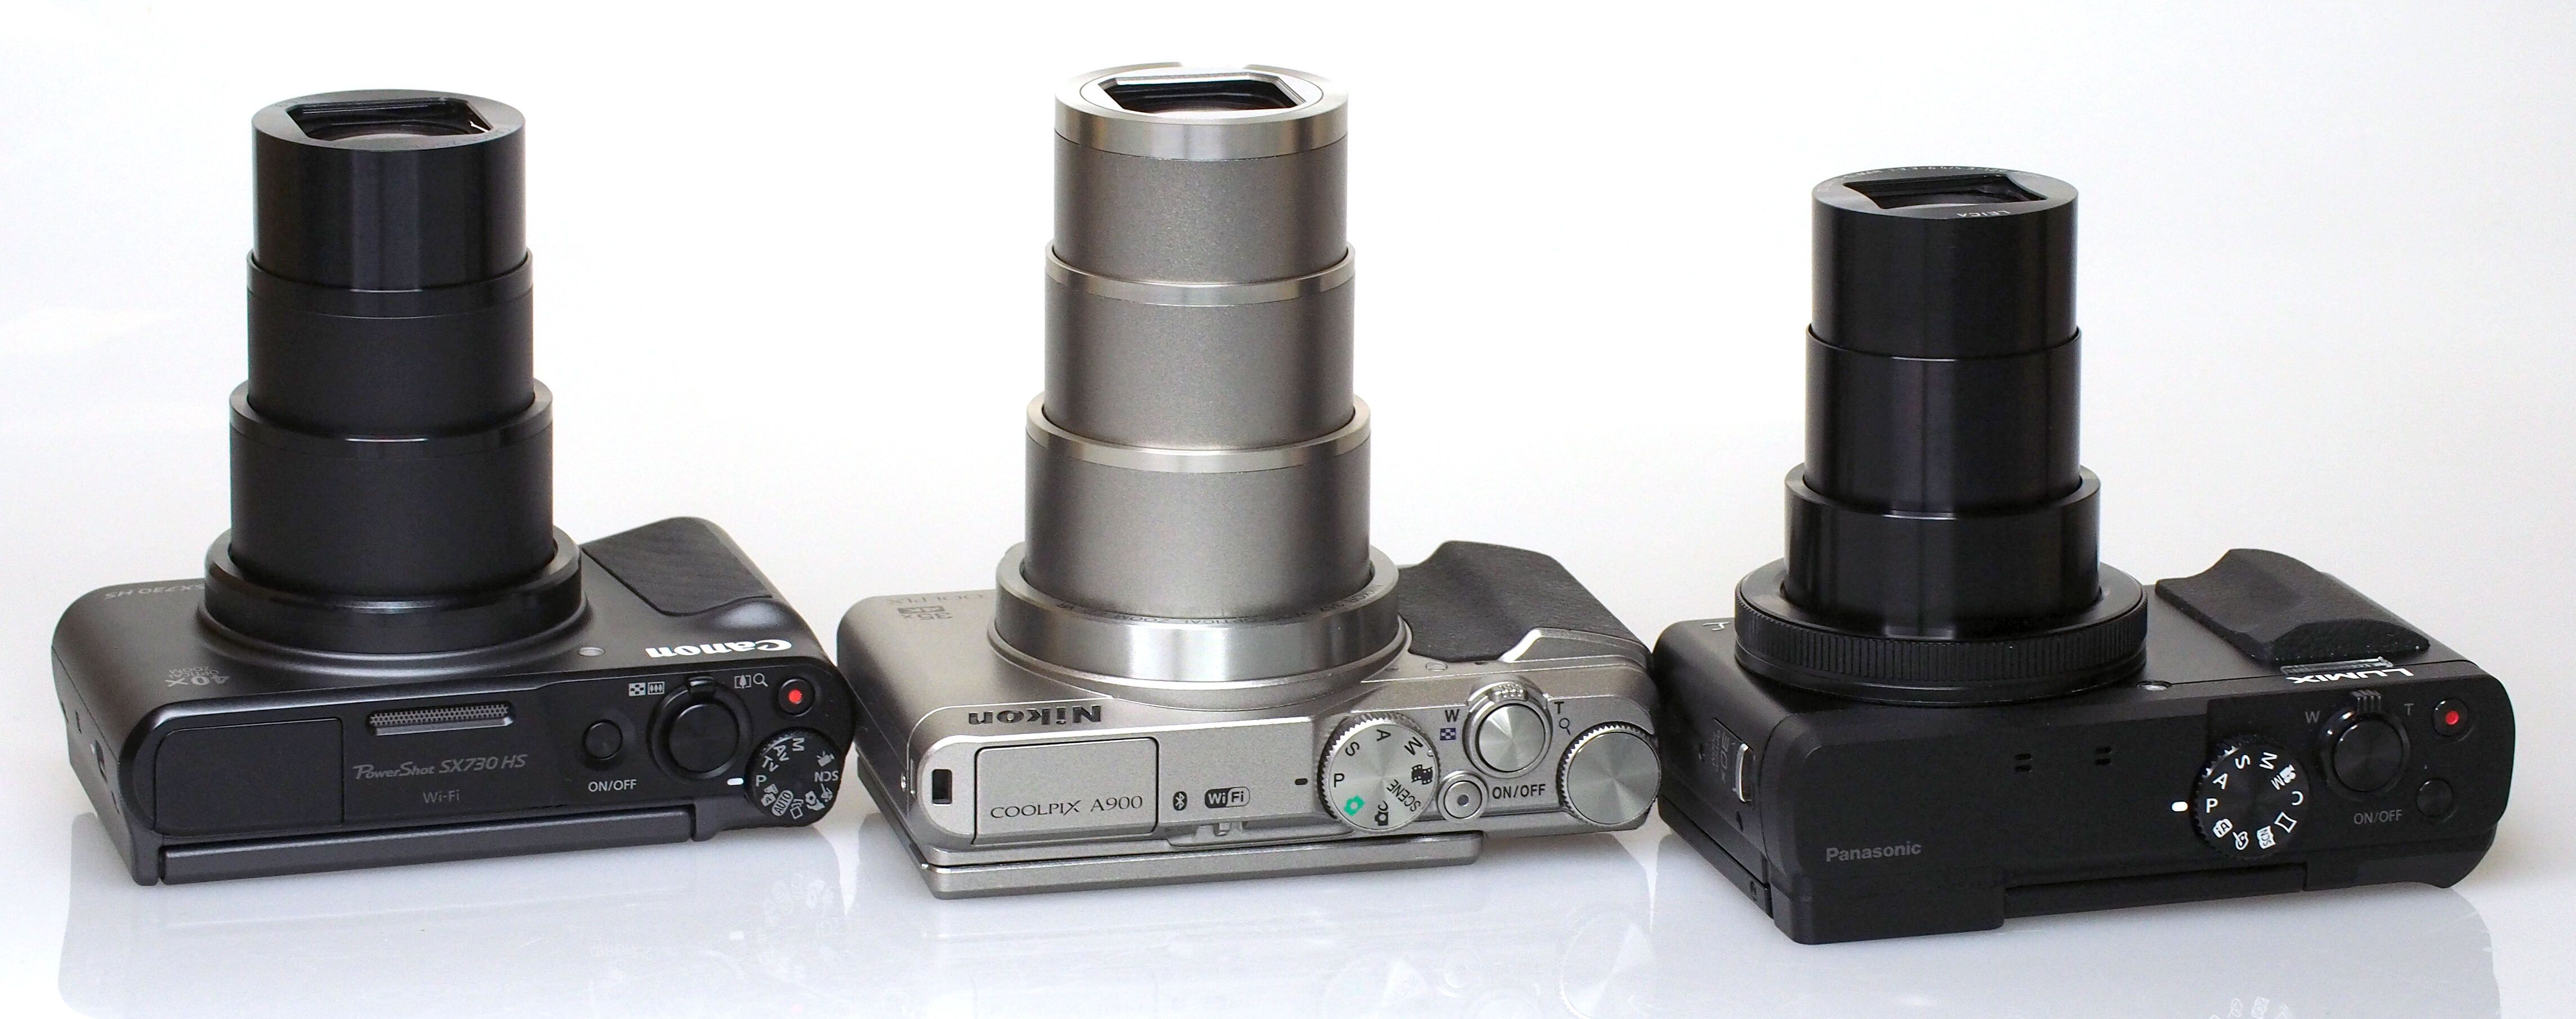 Highres Canon Powershot S X730 Hs Vs Nikon Coolpix A900 Vs Panasonic Lumix T Z90 3 1496652428